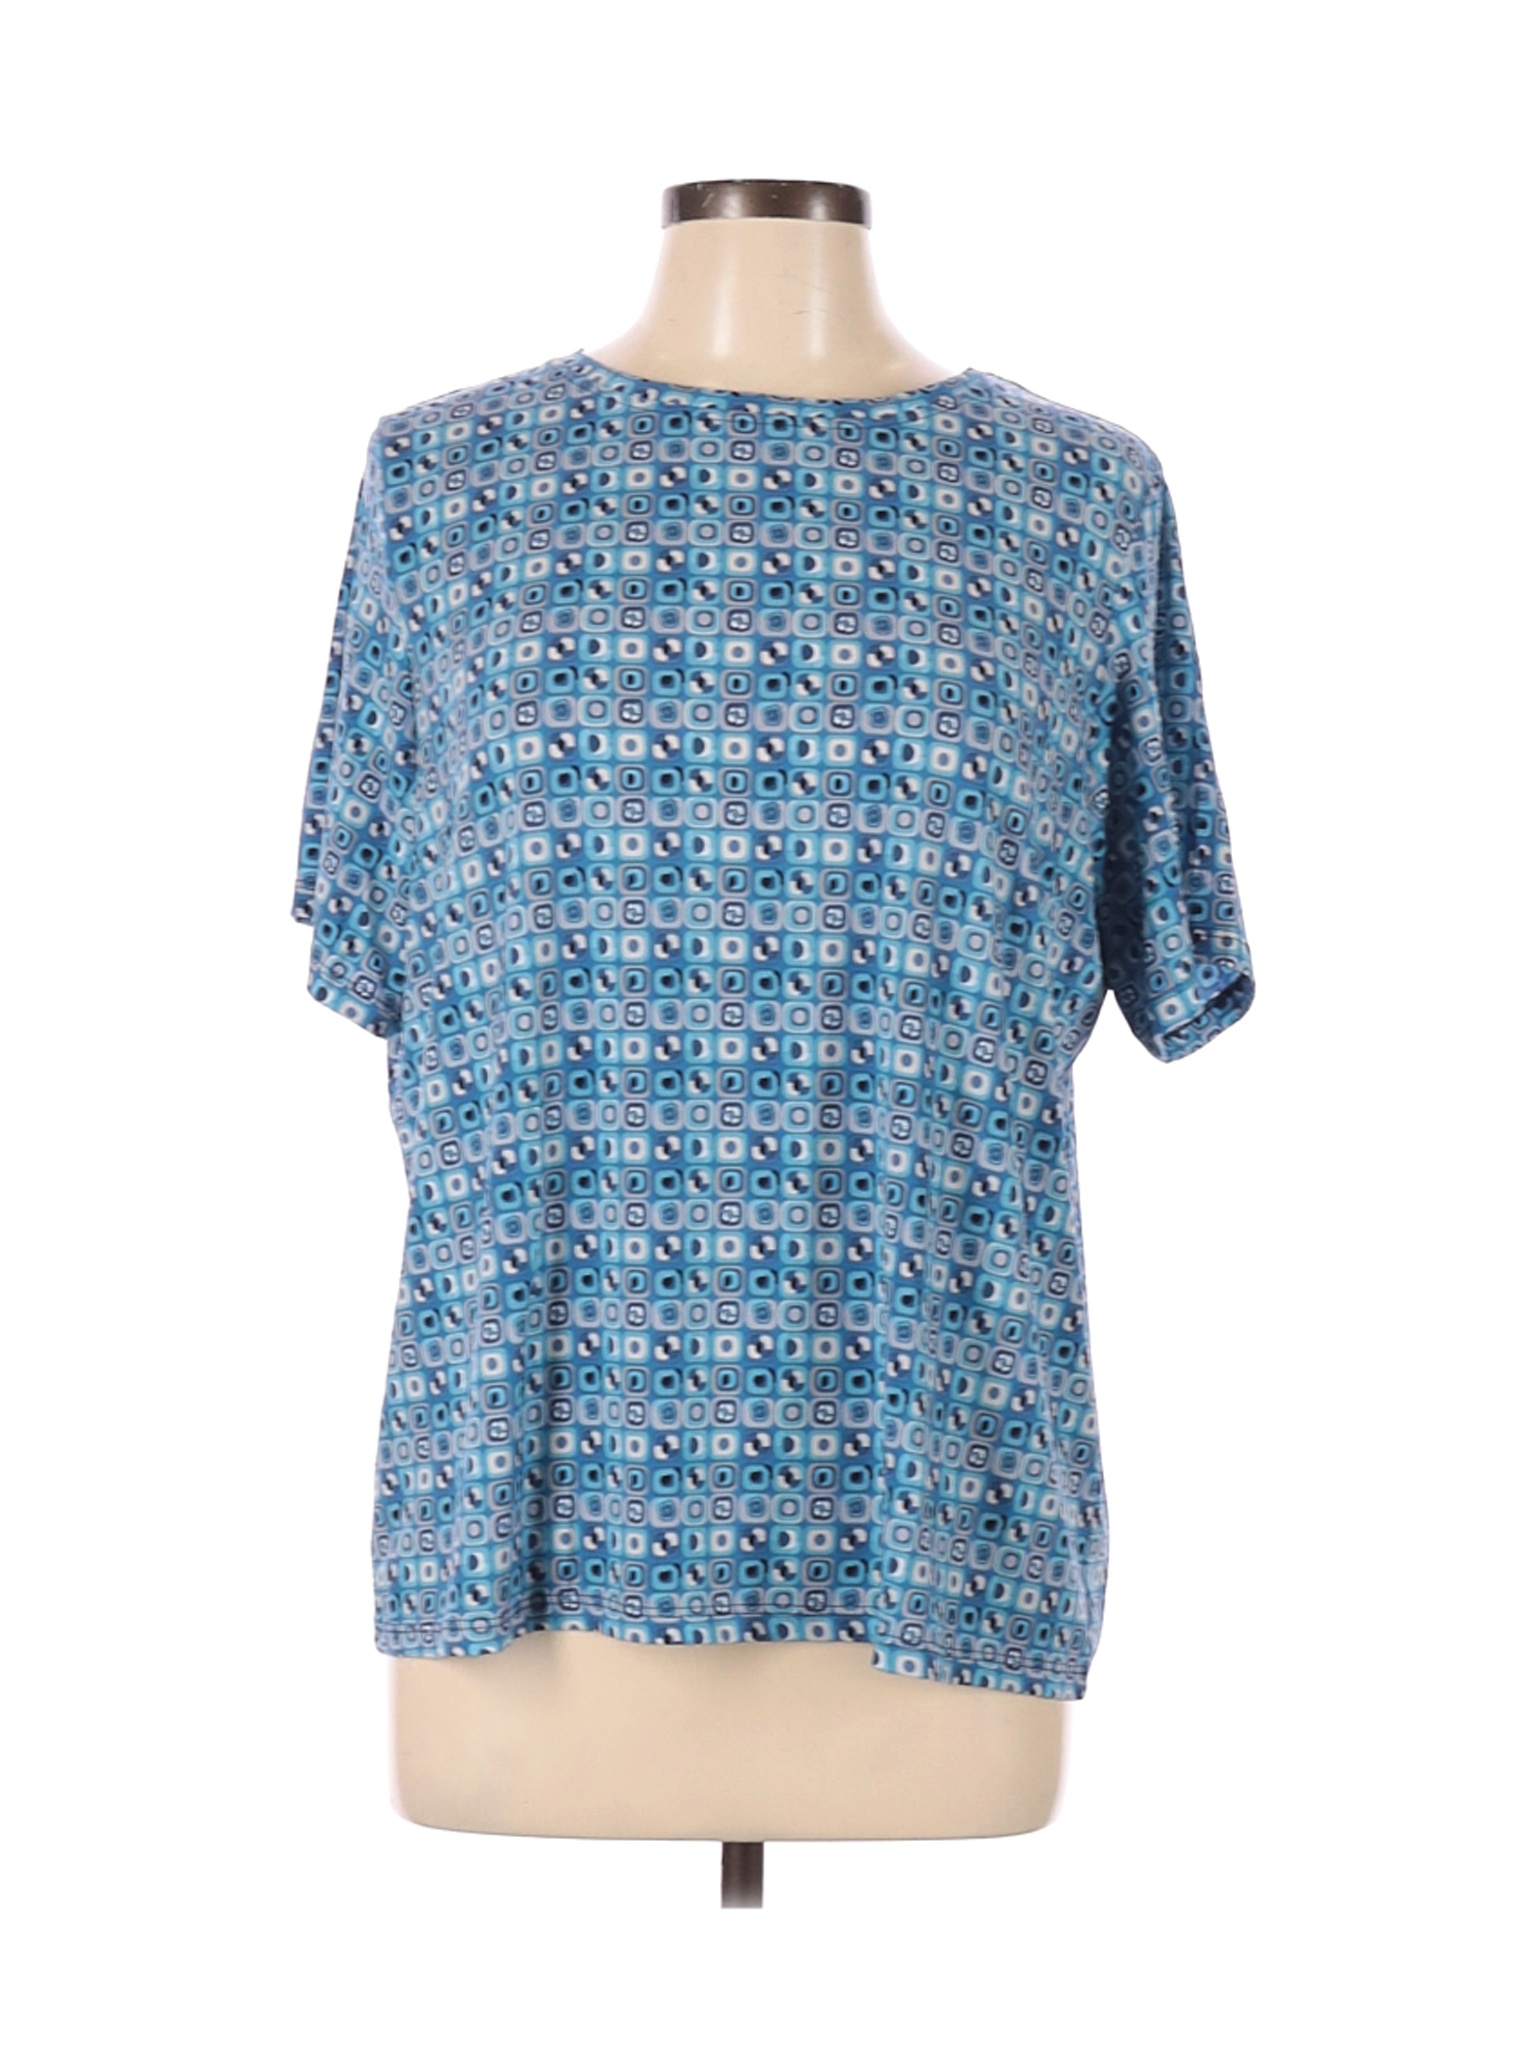 Allison Daley Women Blue Short Sleeve T-Shirt L | eBay